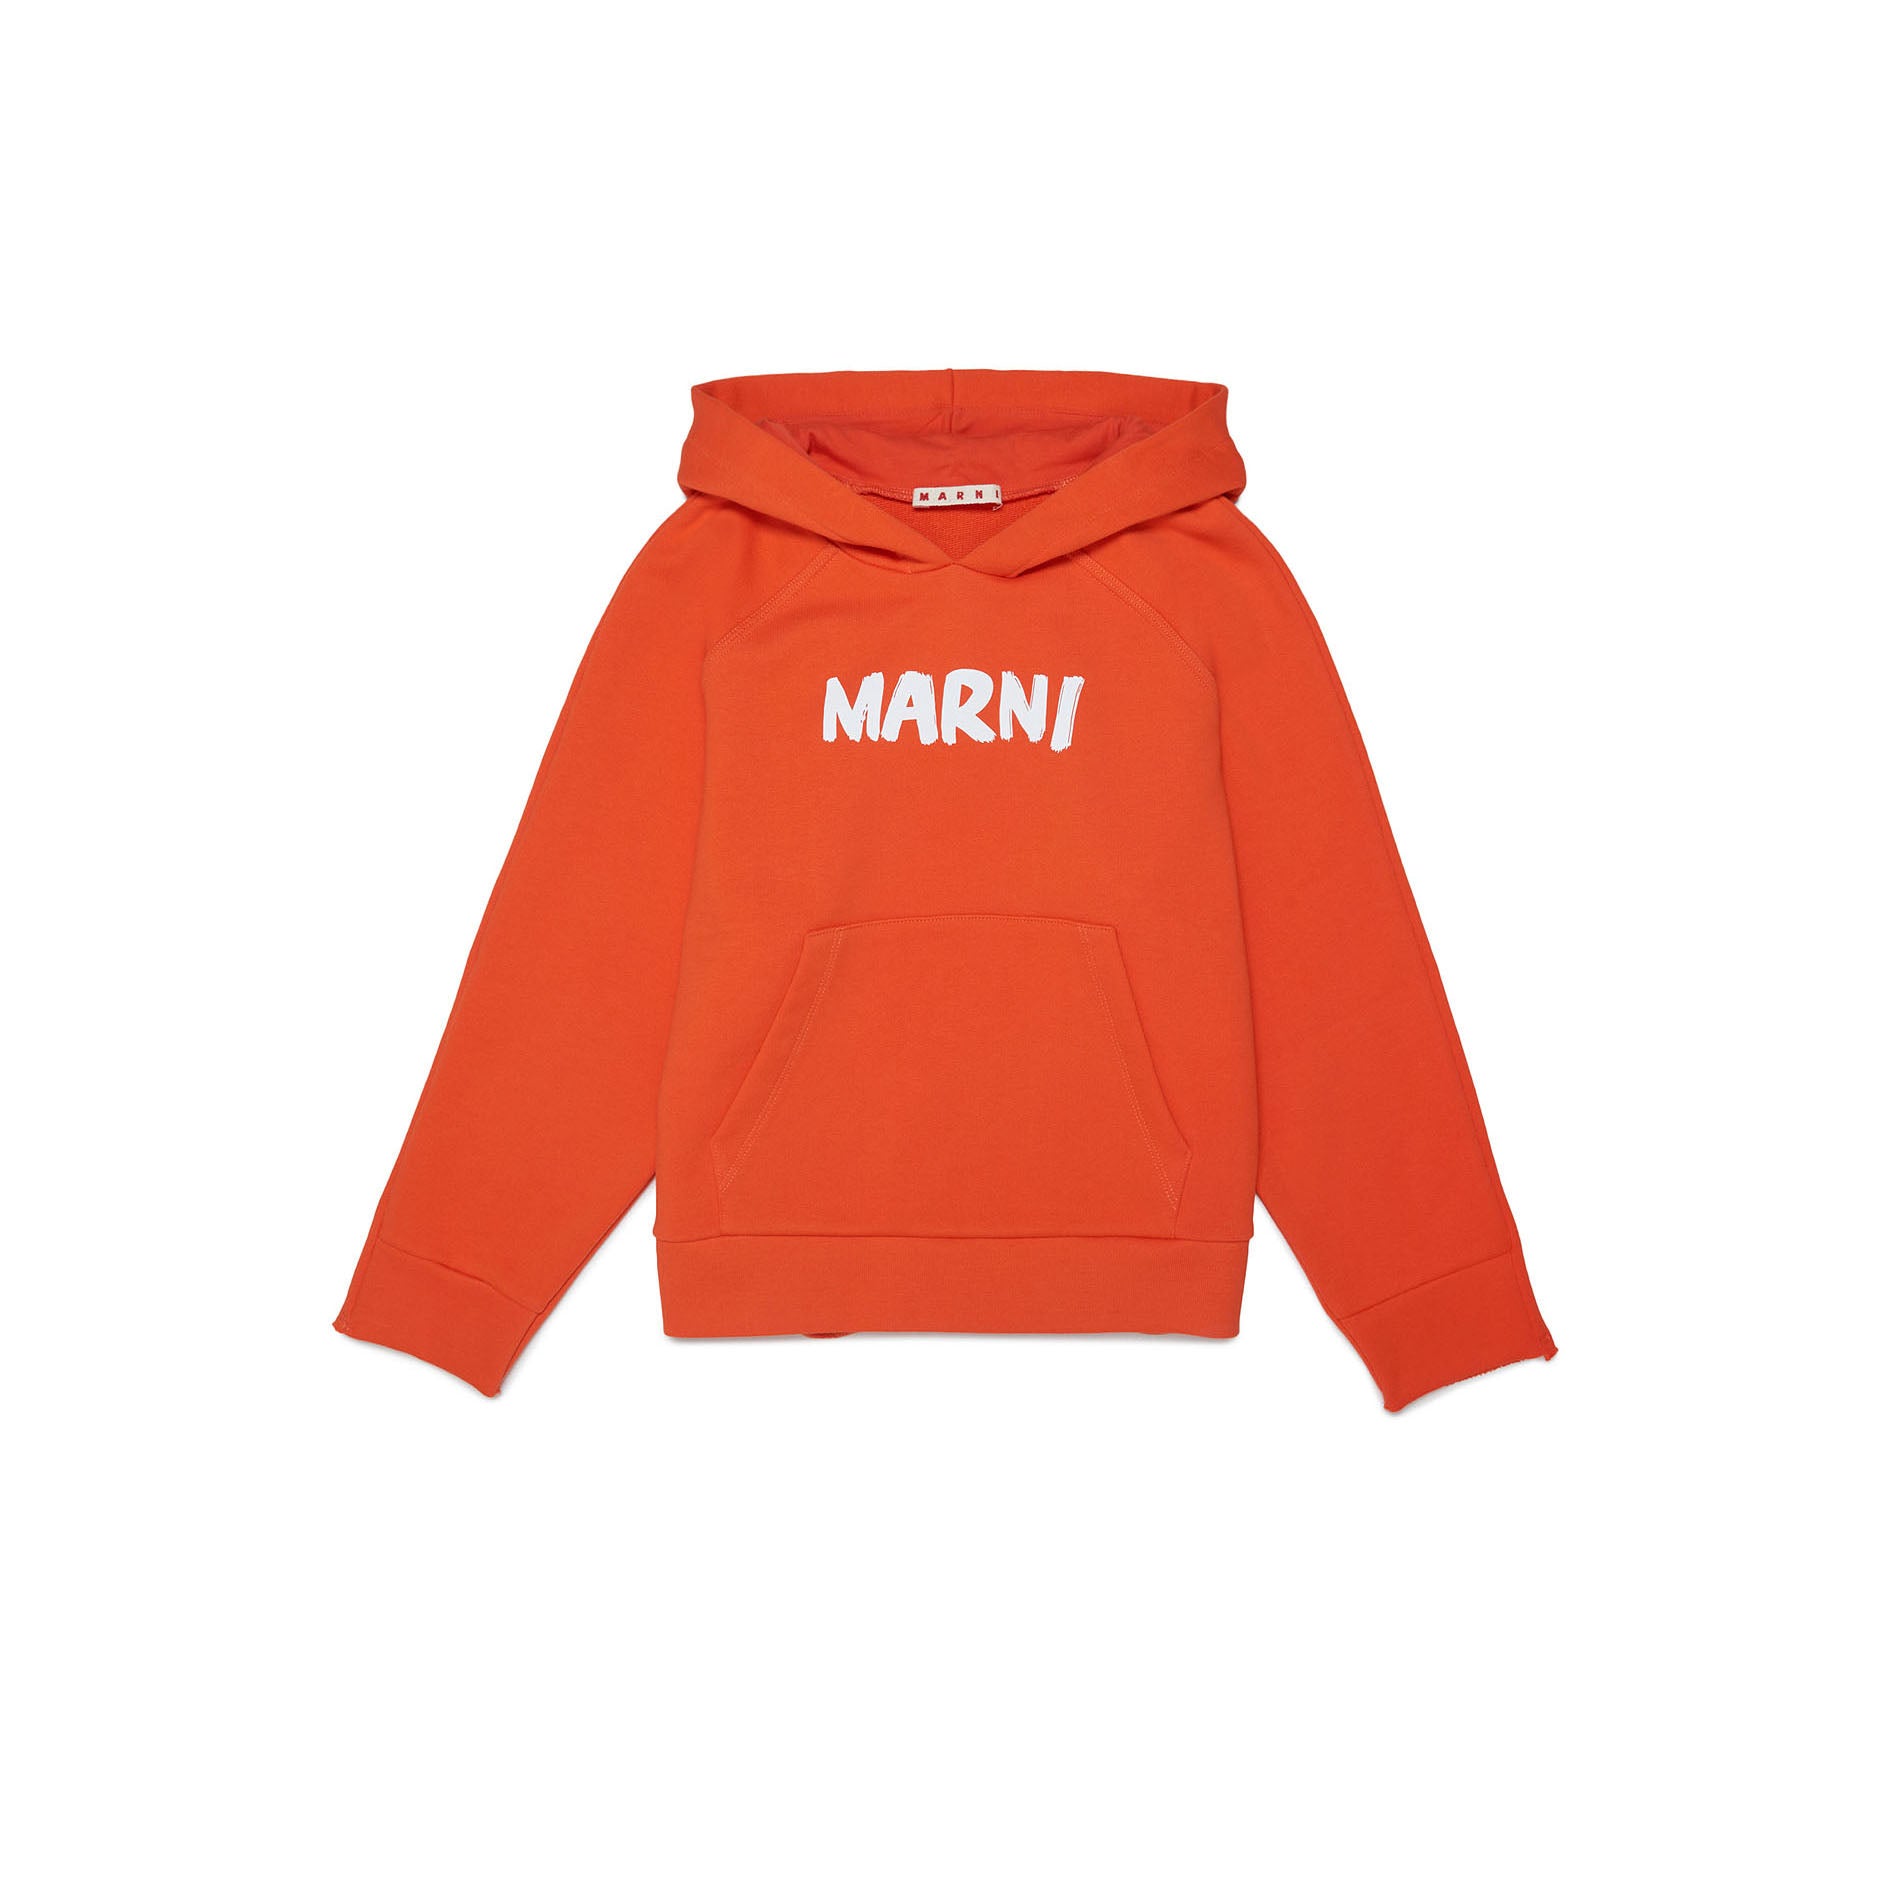 Boys & Girls Orange Hooded Cotton Sweatshirt